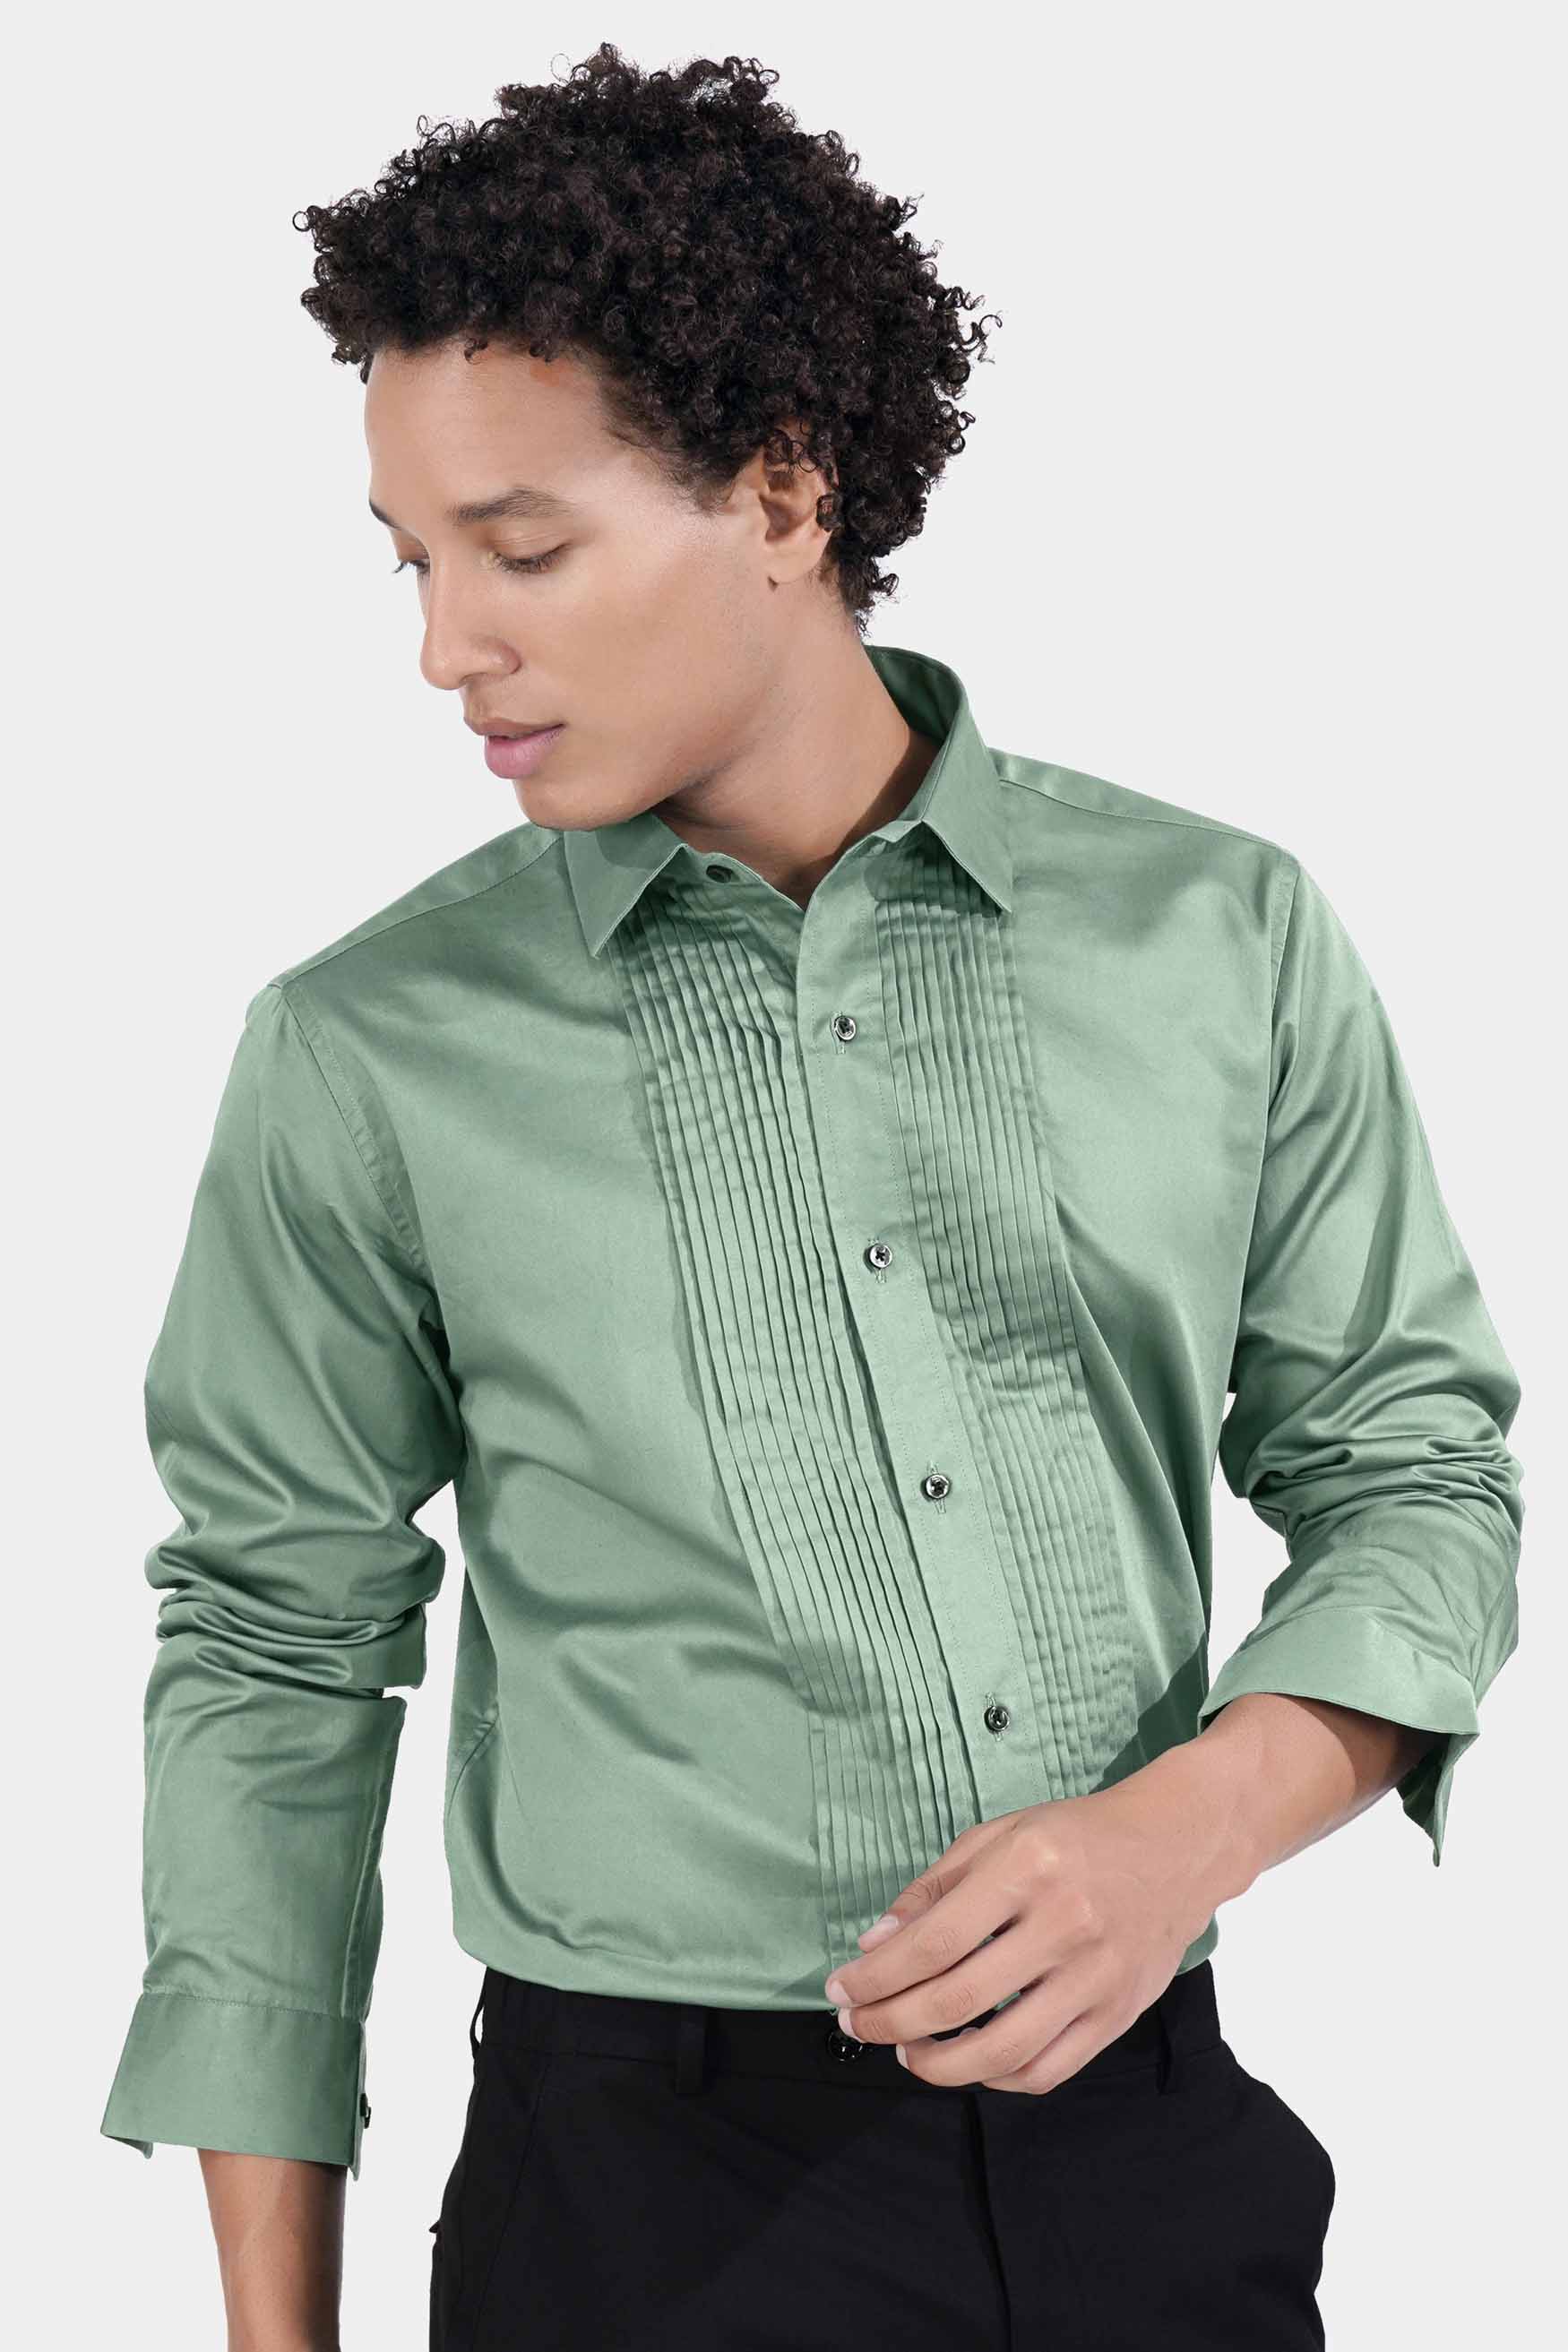 Oxley Green Subtle Sheen Super Soft Premium Cotton Tuxedo Shirt